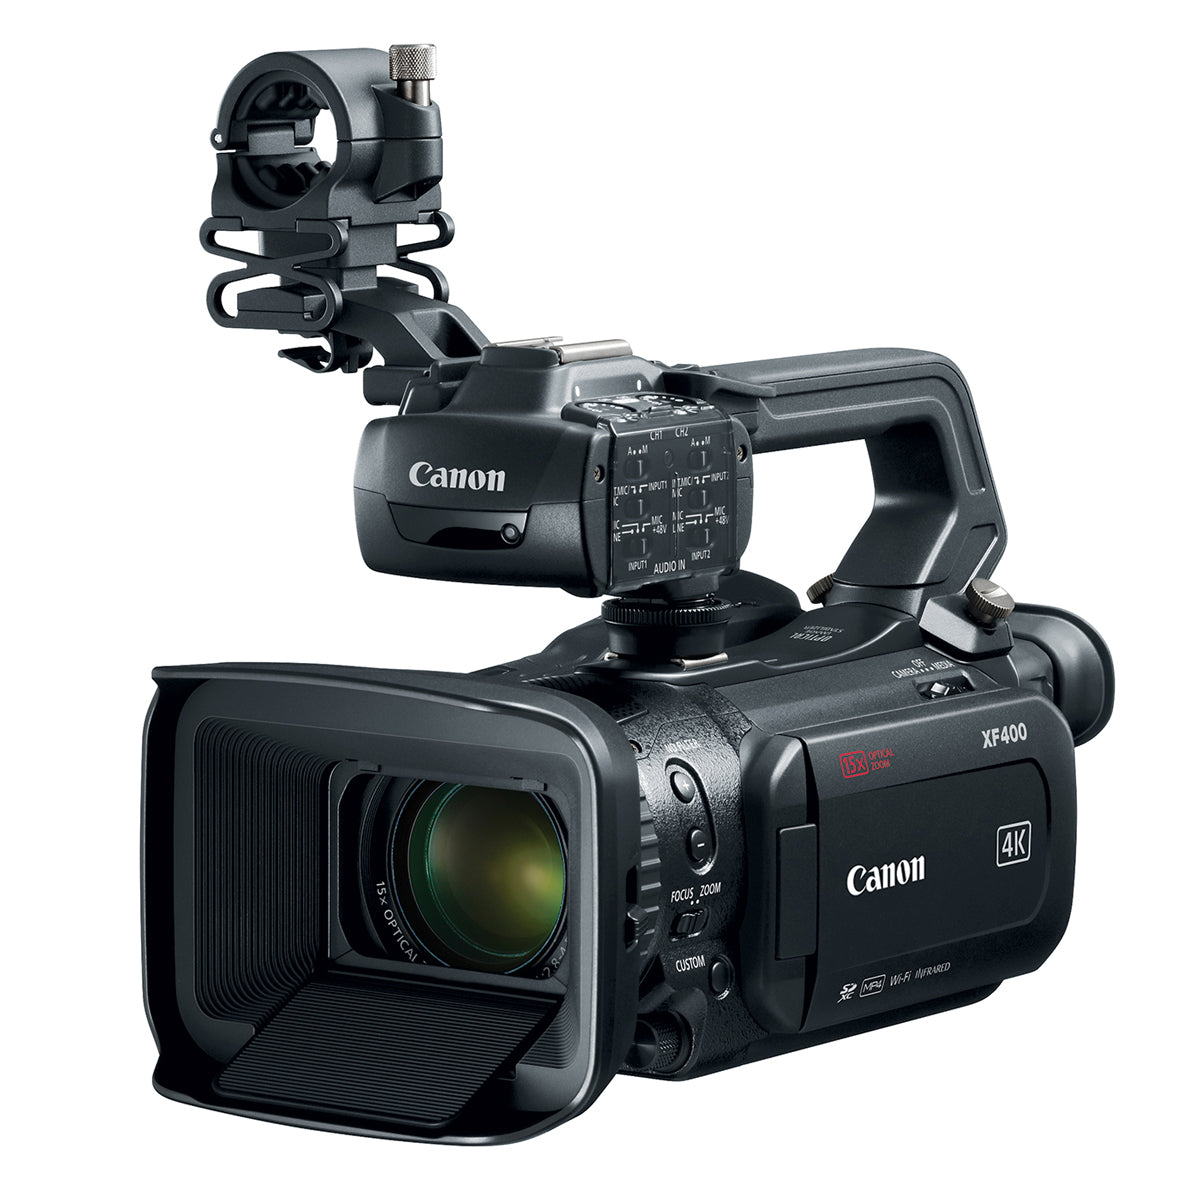 Canon XF400 4K Digital Camcorder